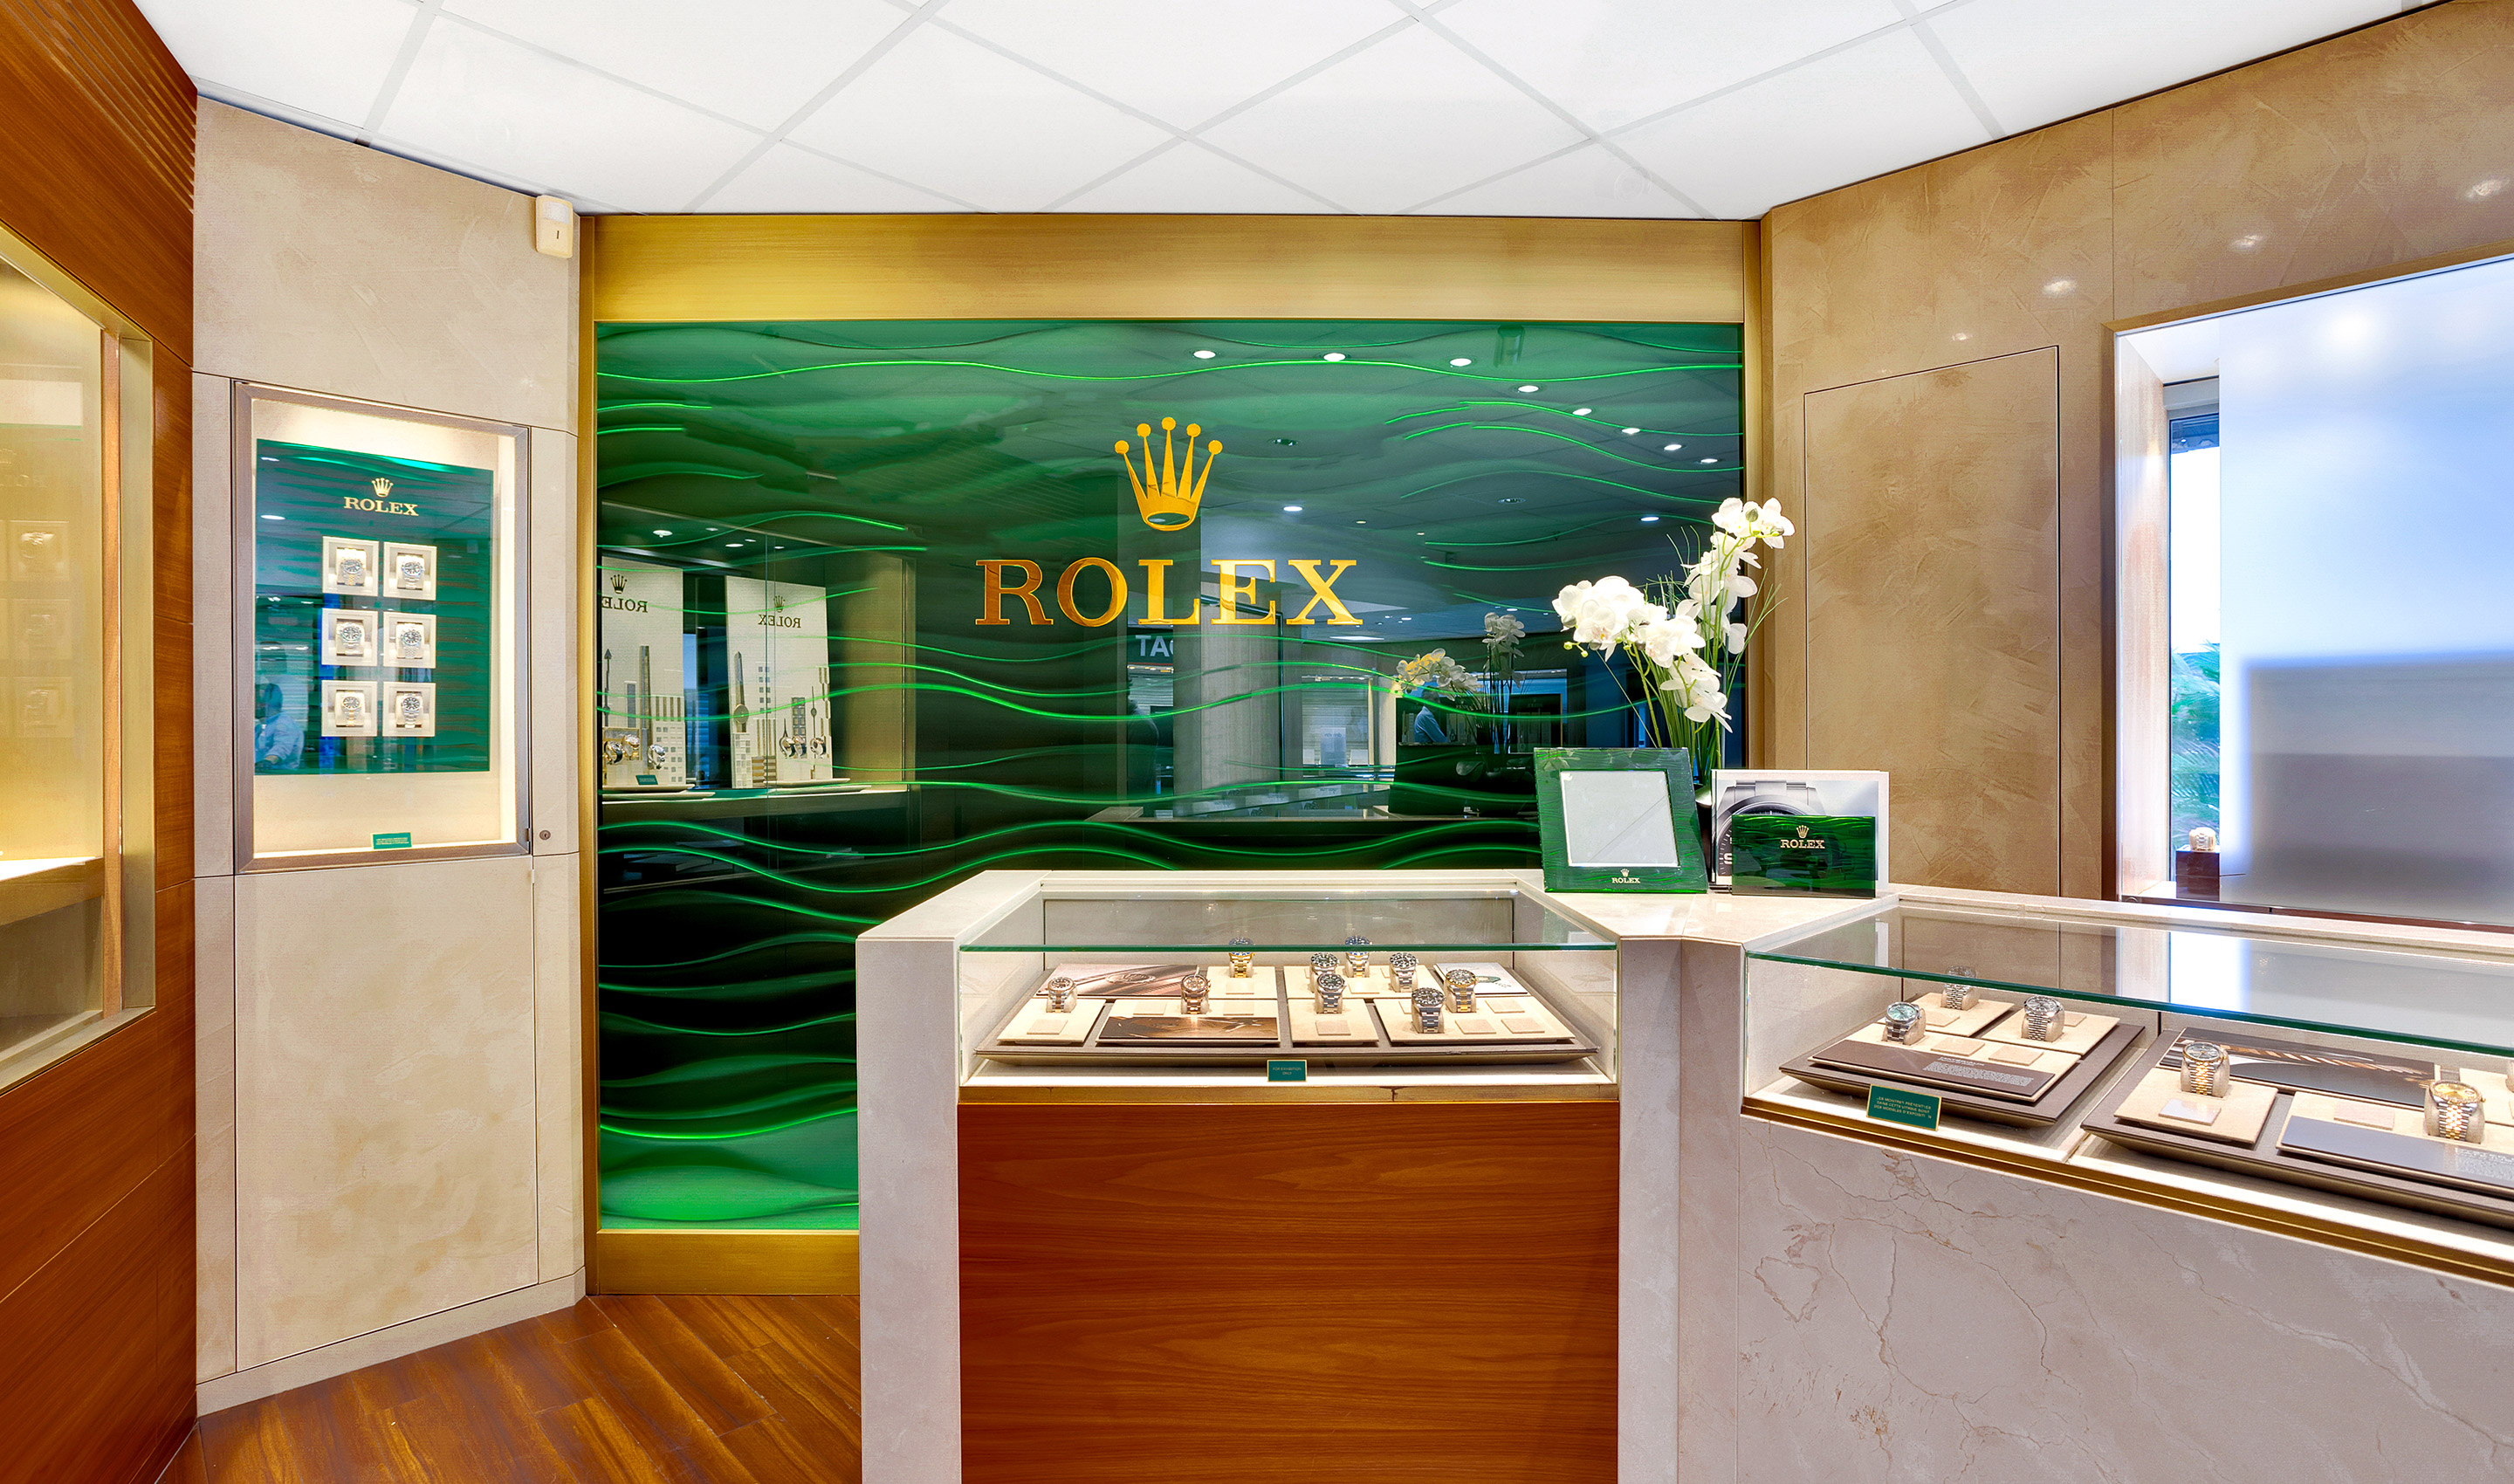  Contact Goldfinger Saint-Martin (Caribbean), Official Rolex retailer